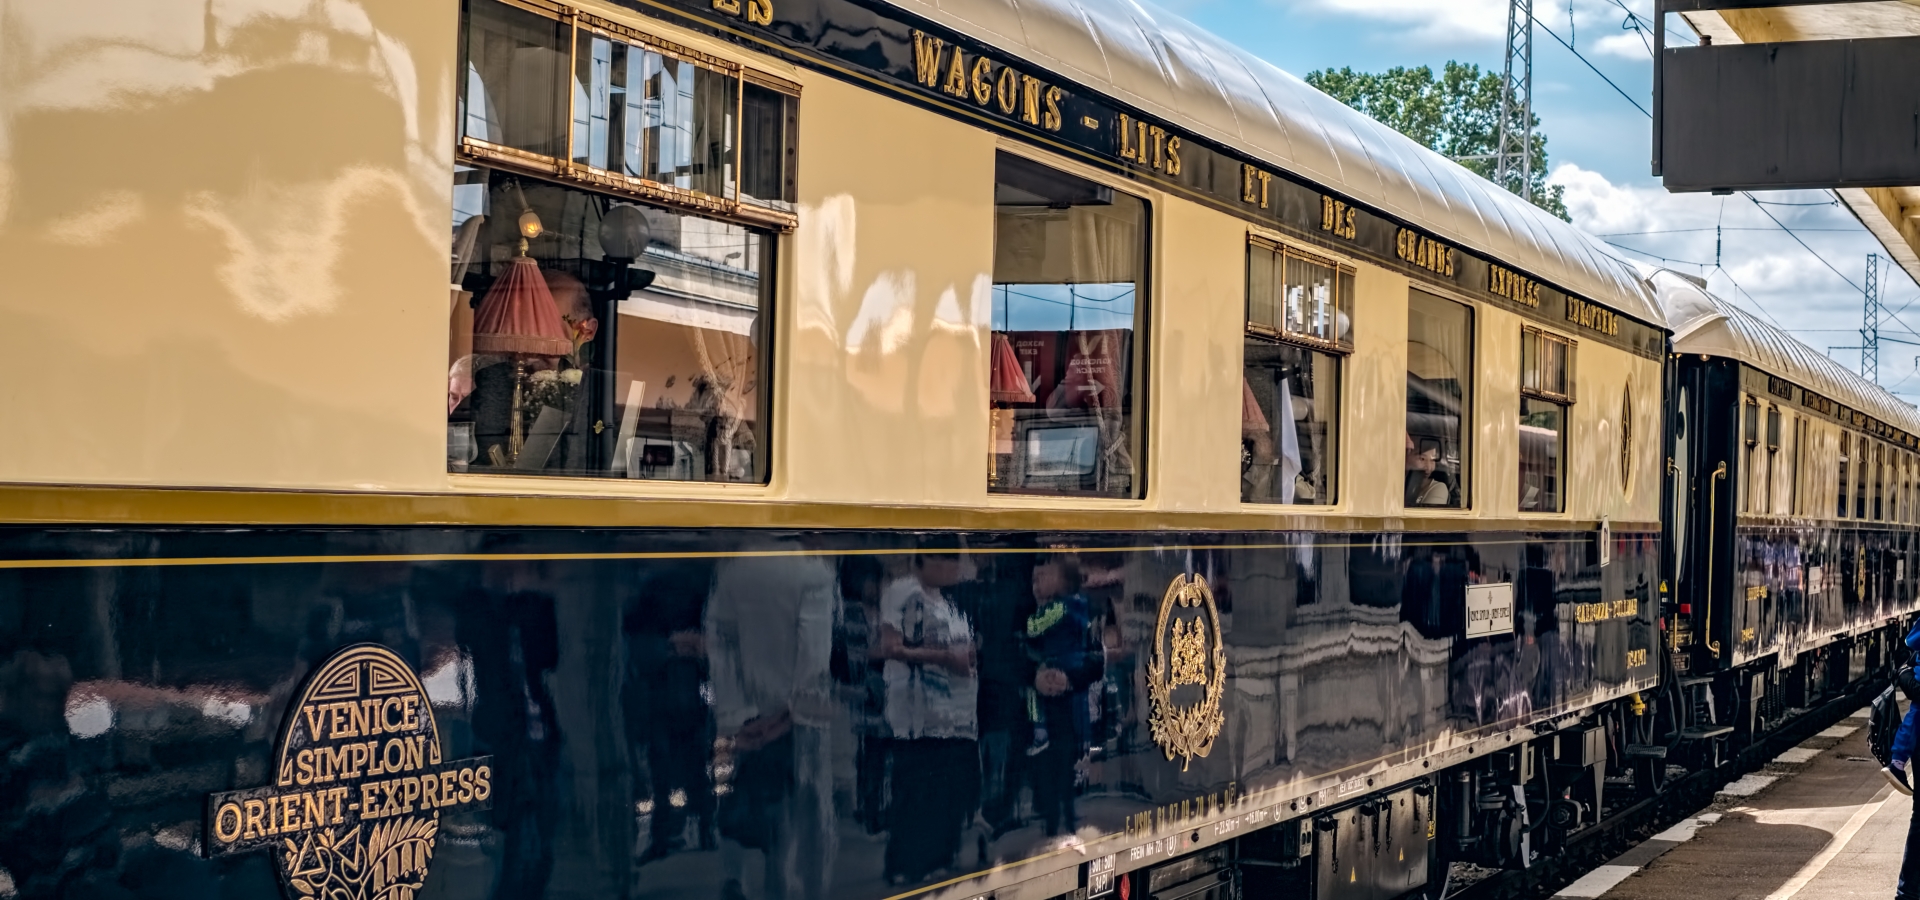 Trains: Venice Simplon-Orient-Express